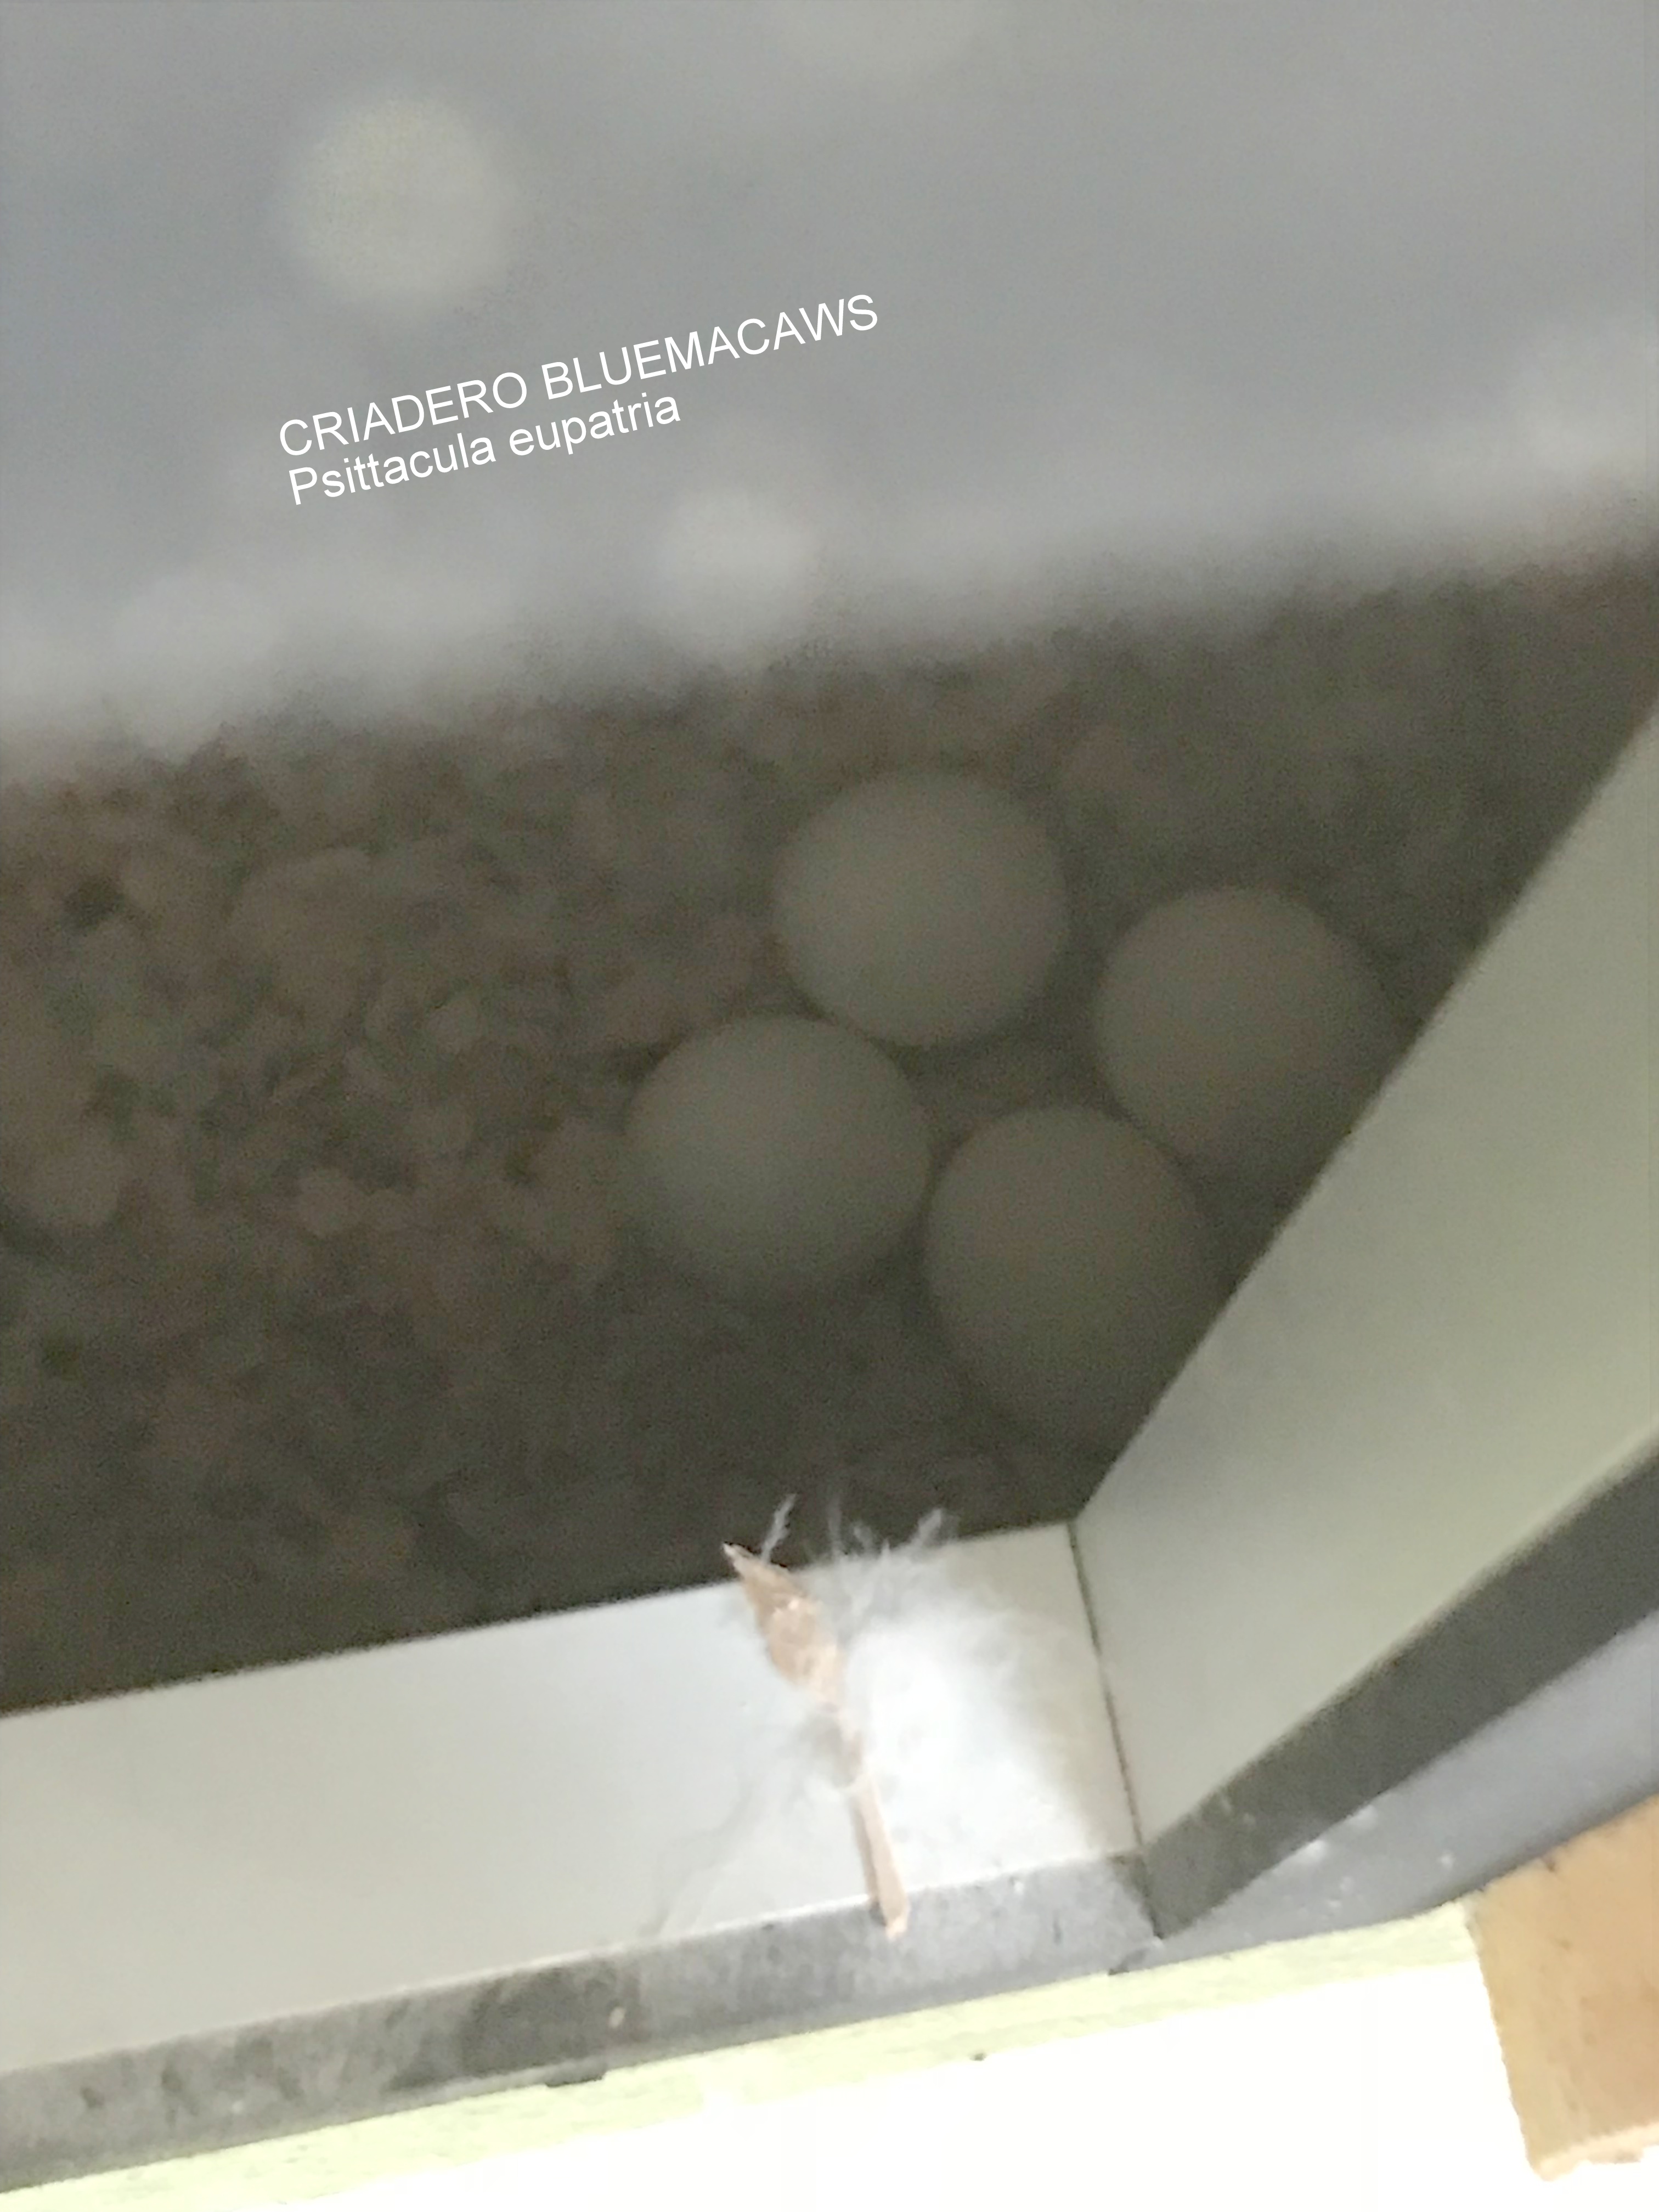 Huevos de Psittacula eupatria